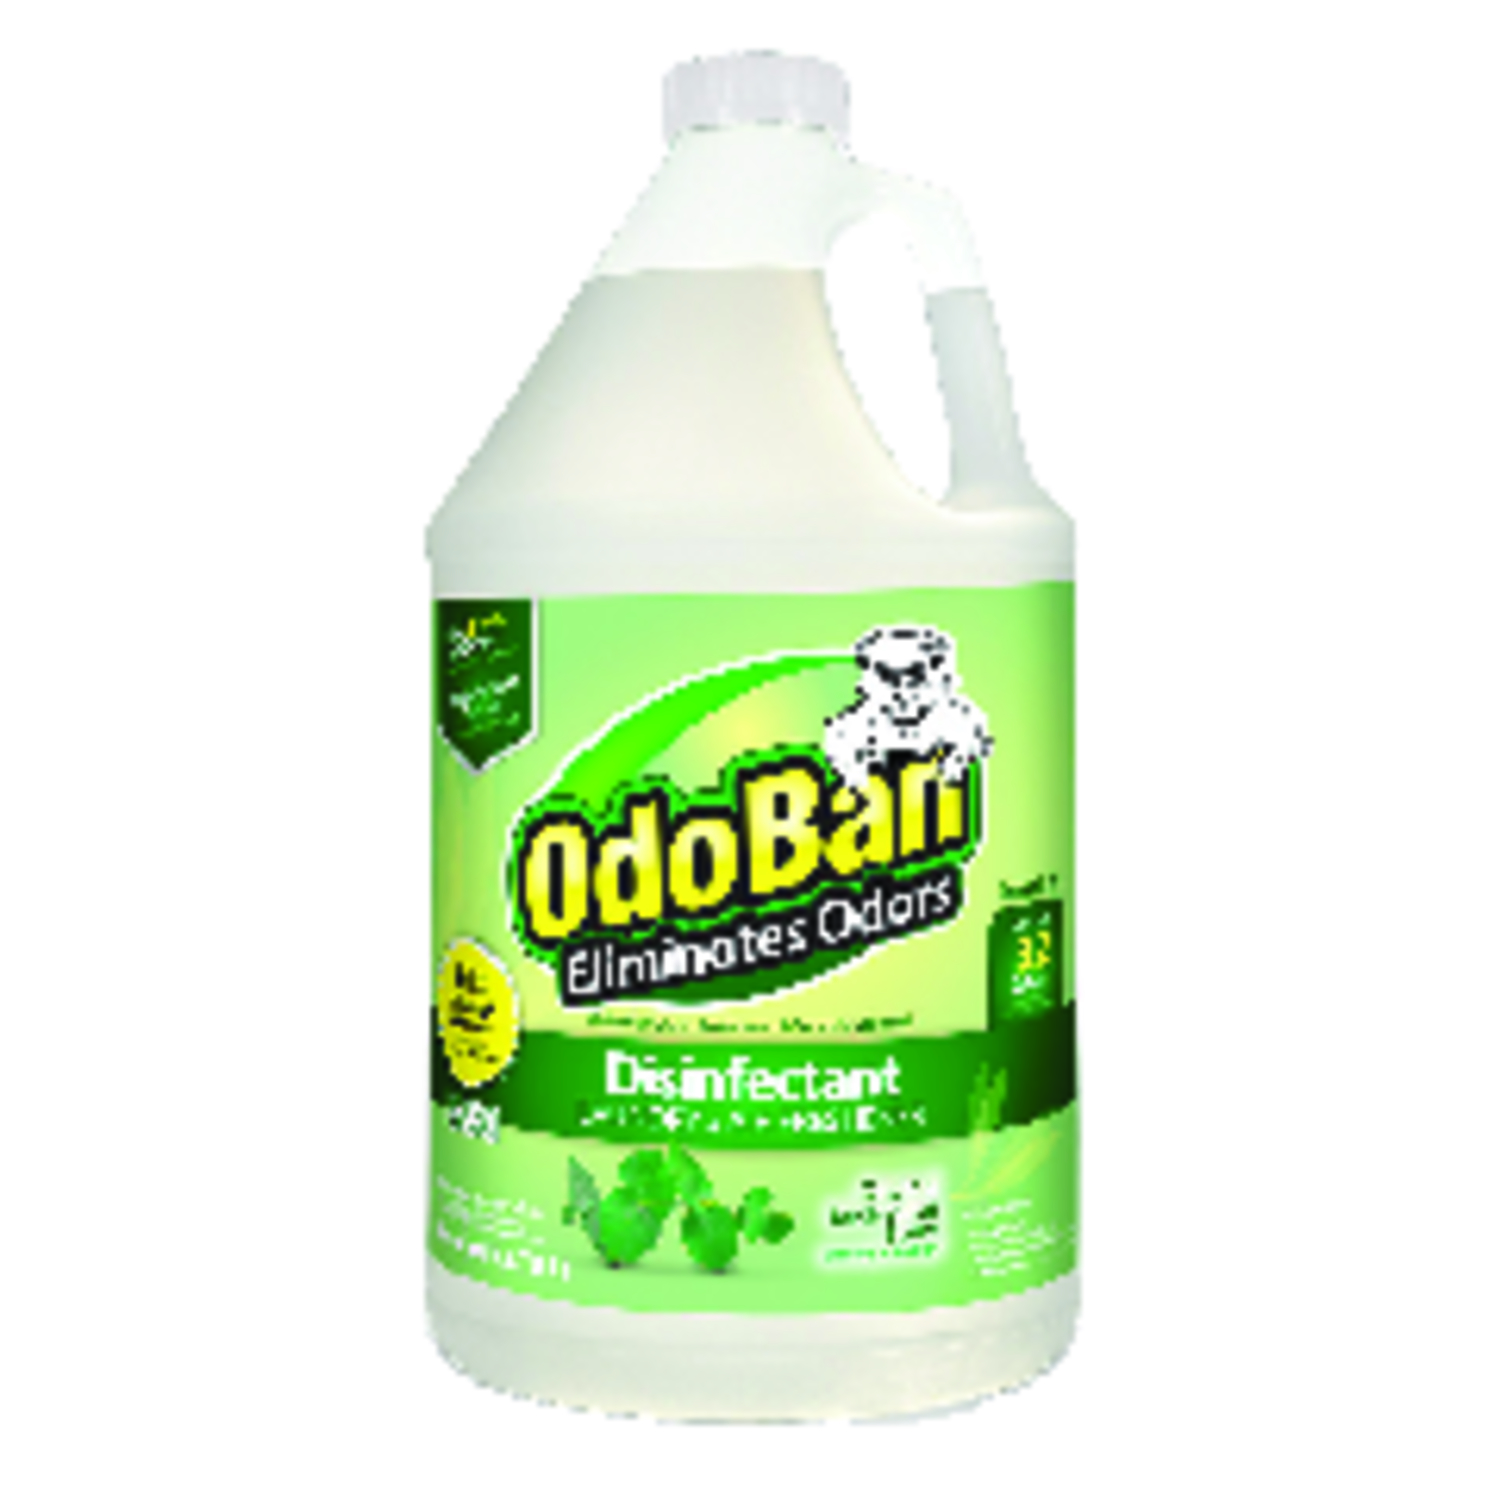 OdoBan Eucalyptus Scent Disinfectant Laundry & Air Freshener 1 gal 1 pk